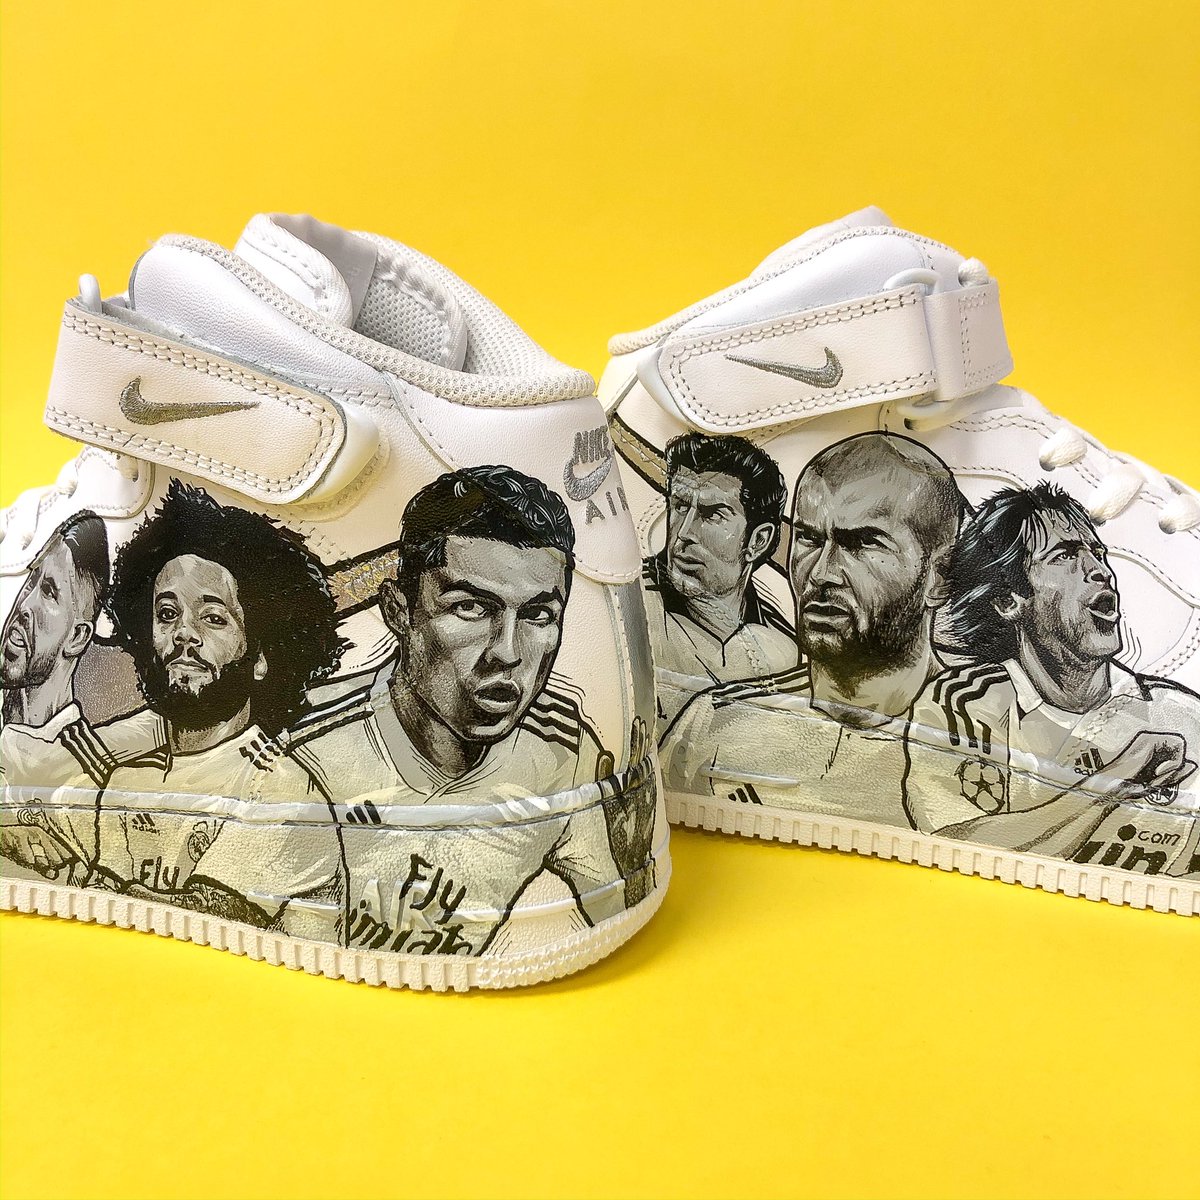 Melonkicks on Twitter: "NIKE AIR FORCE 1 MID. "Real Madrid Legends" Pide tus en / Order your custom shoes on https://t.co/VFWB49f5ap 📦 Envíos a todo el mundo. ✈️ Worldwide